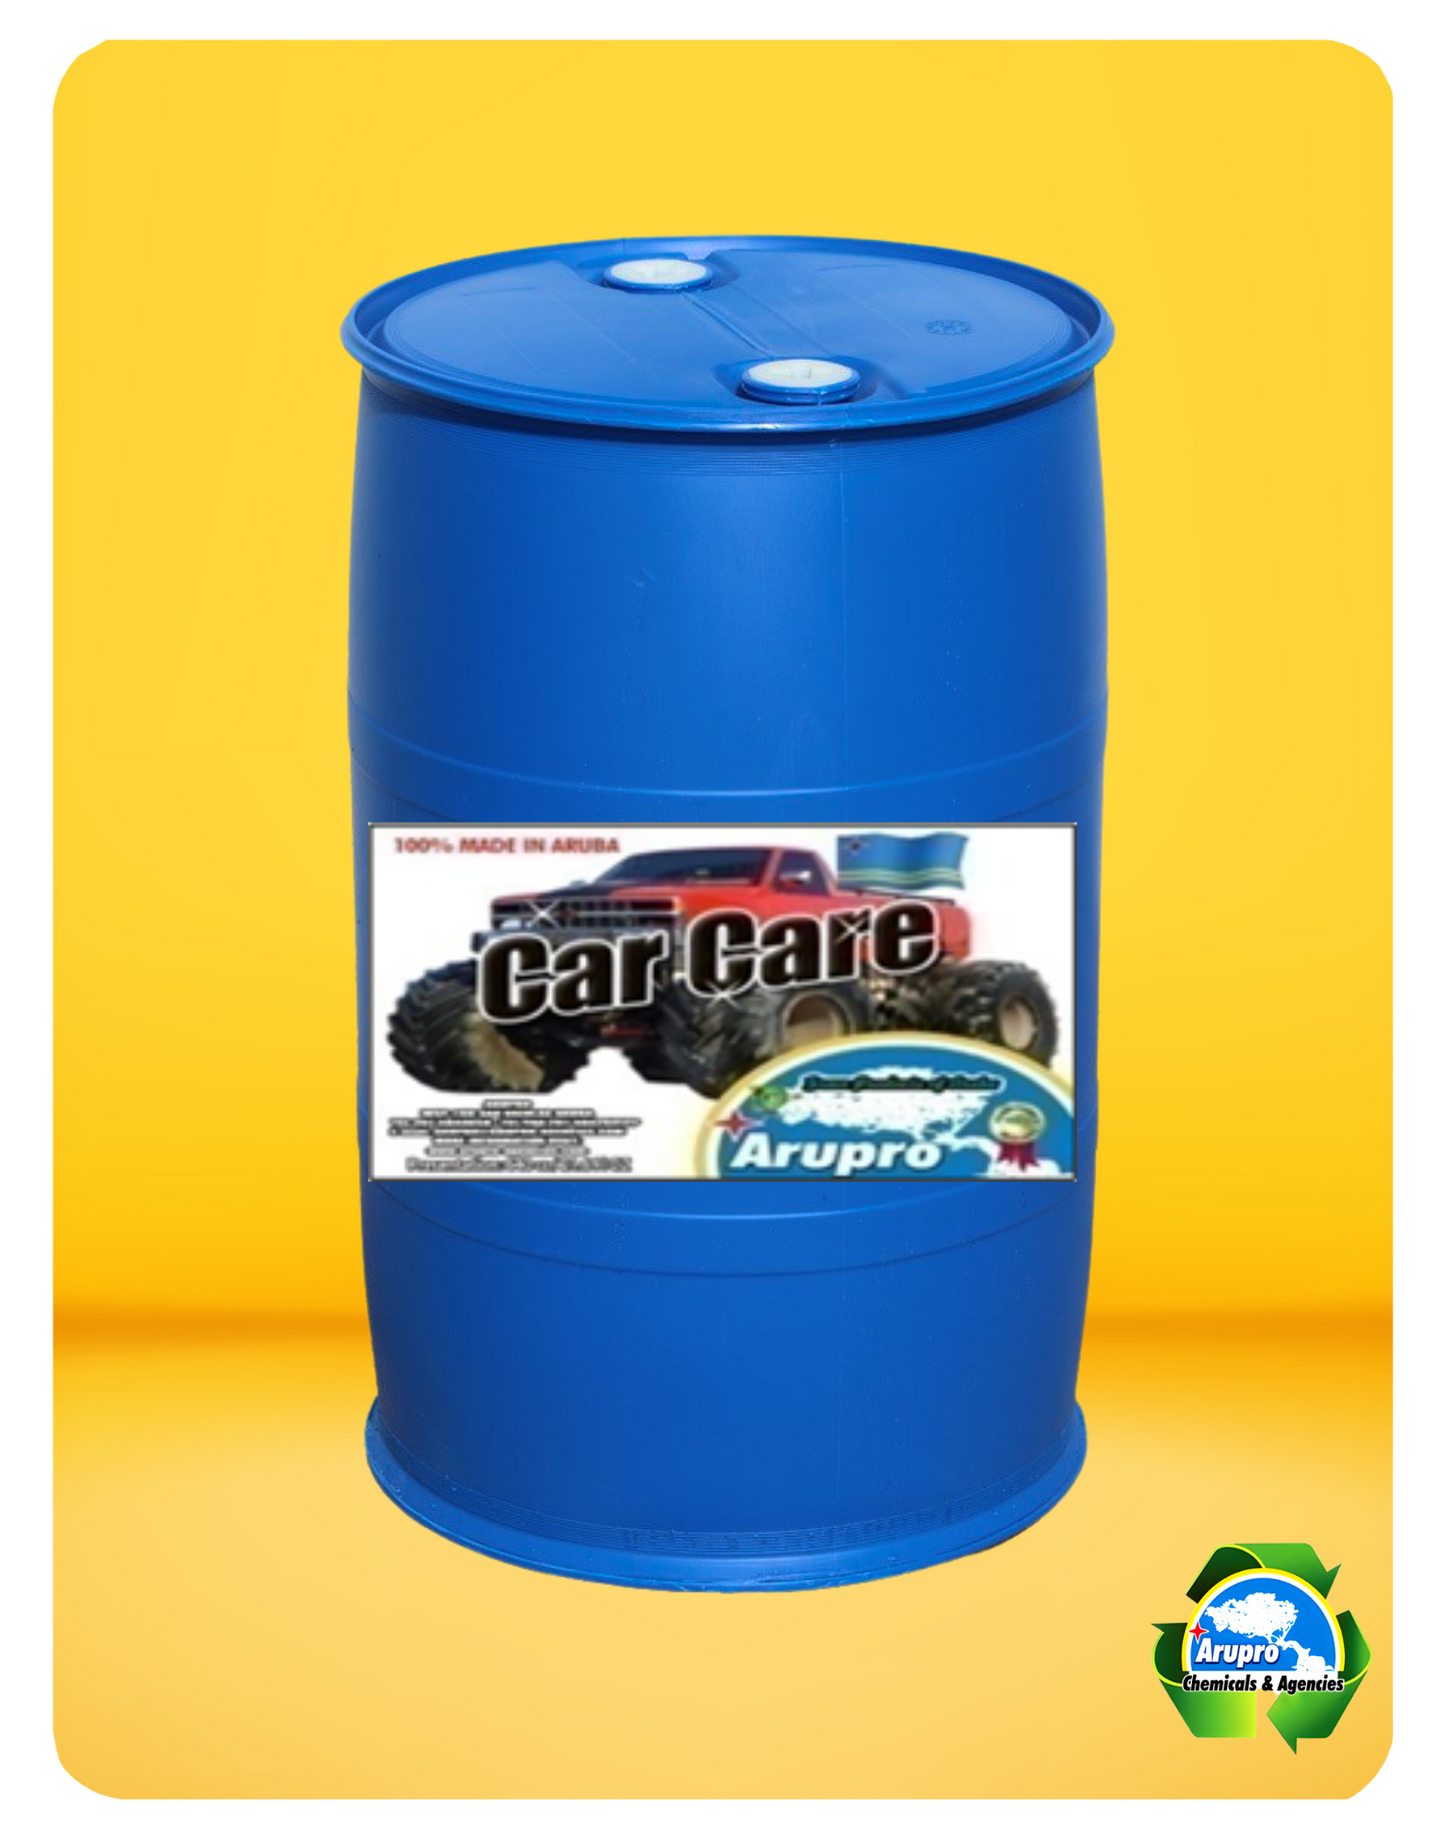 CAR CARE - 500ml